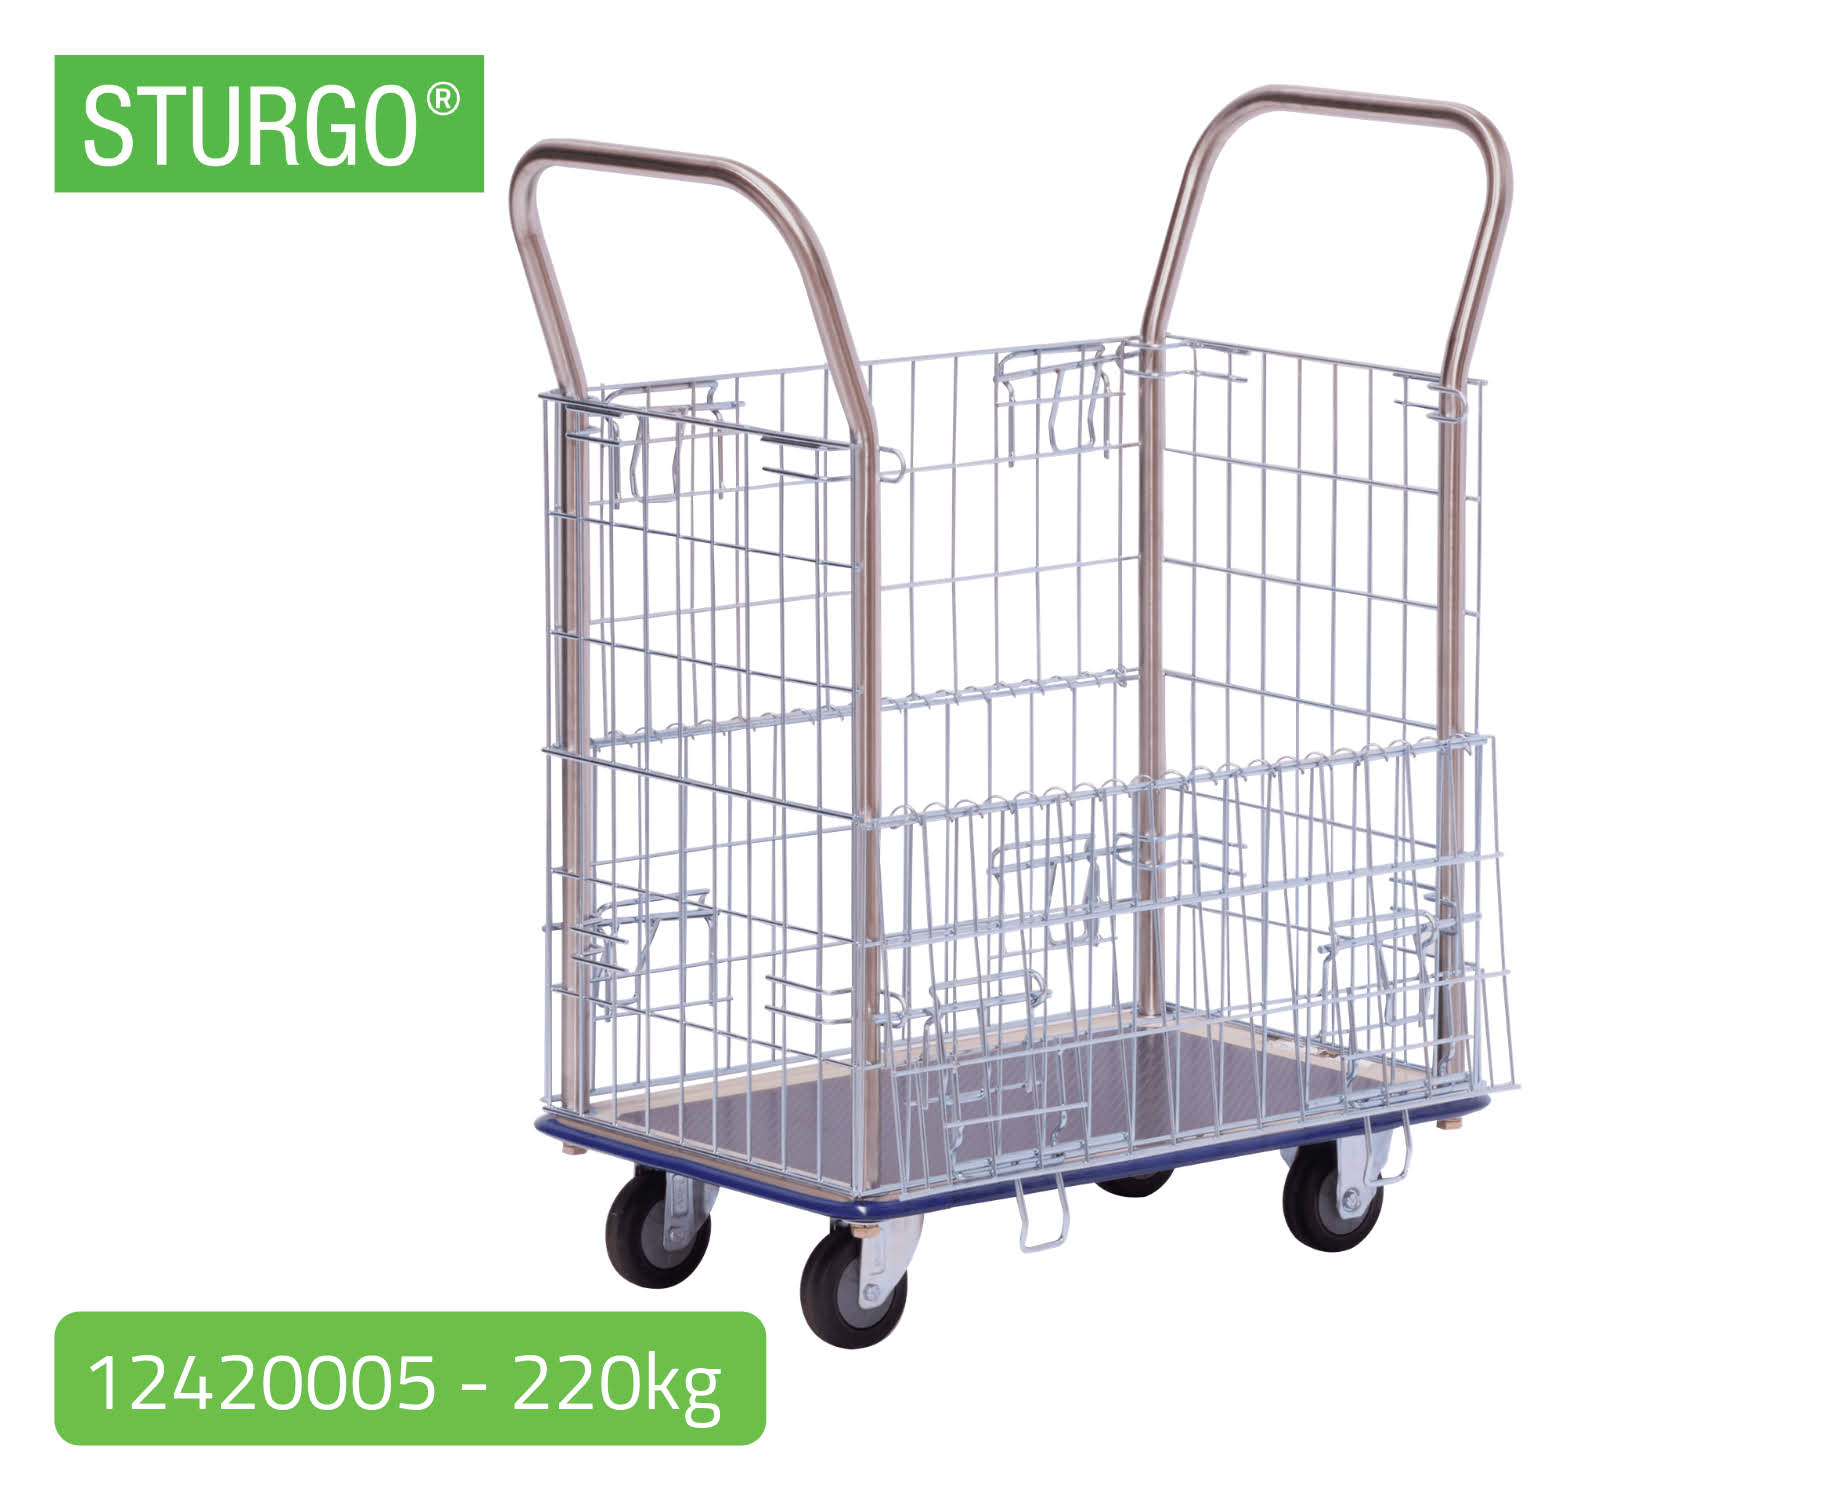 STURGO® Single Platform Trolley - Mesh Sides